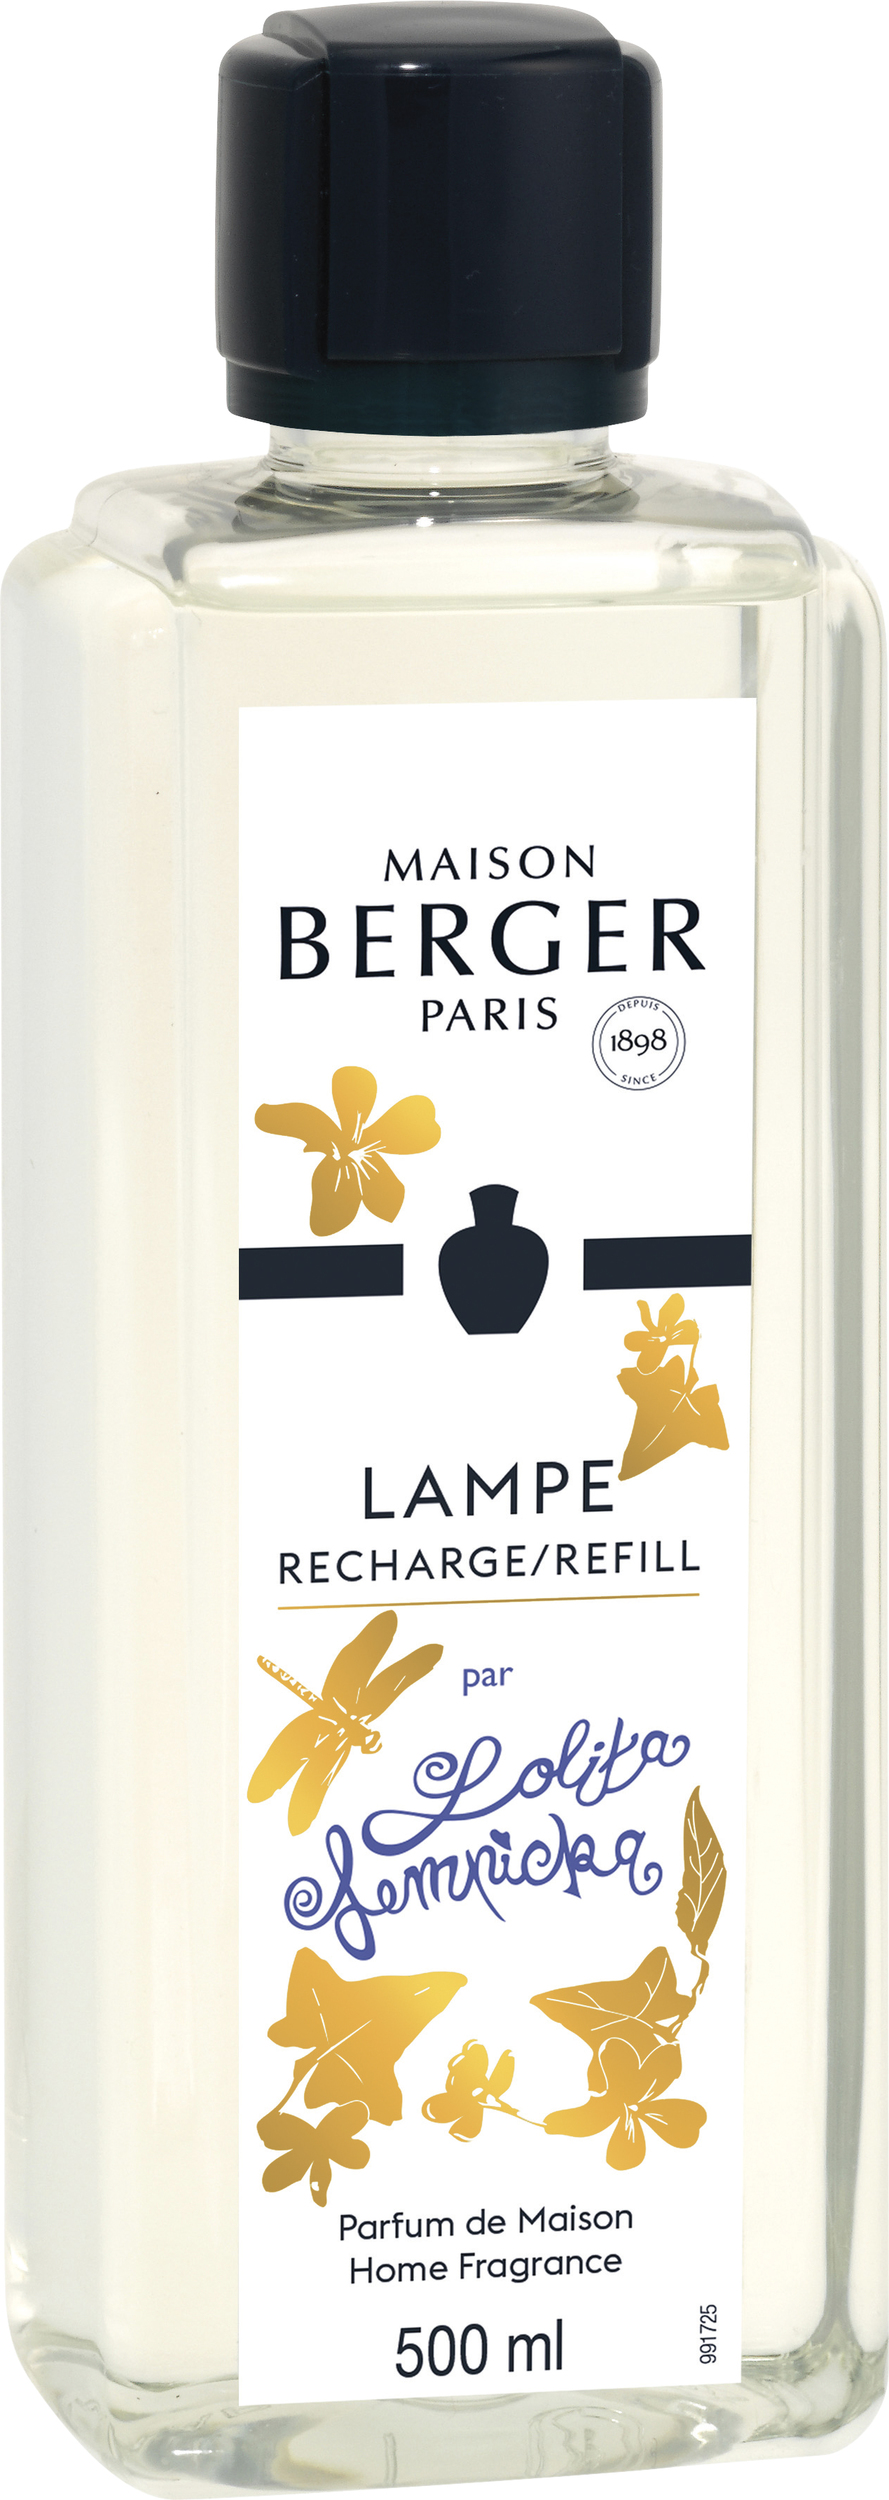 Maison Berger Paris, Lamp: Lolita Black Gift Set w/Lolita Lempicka